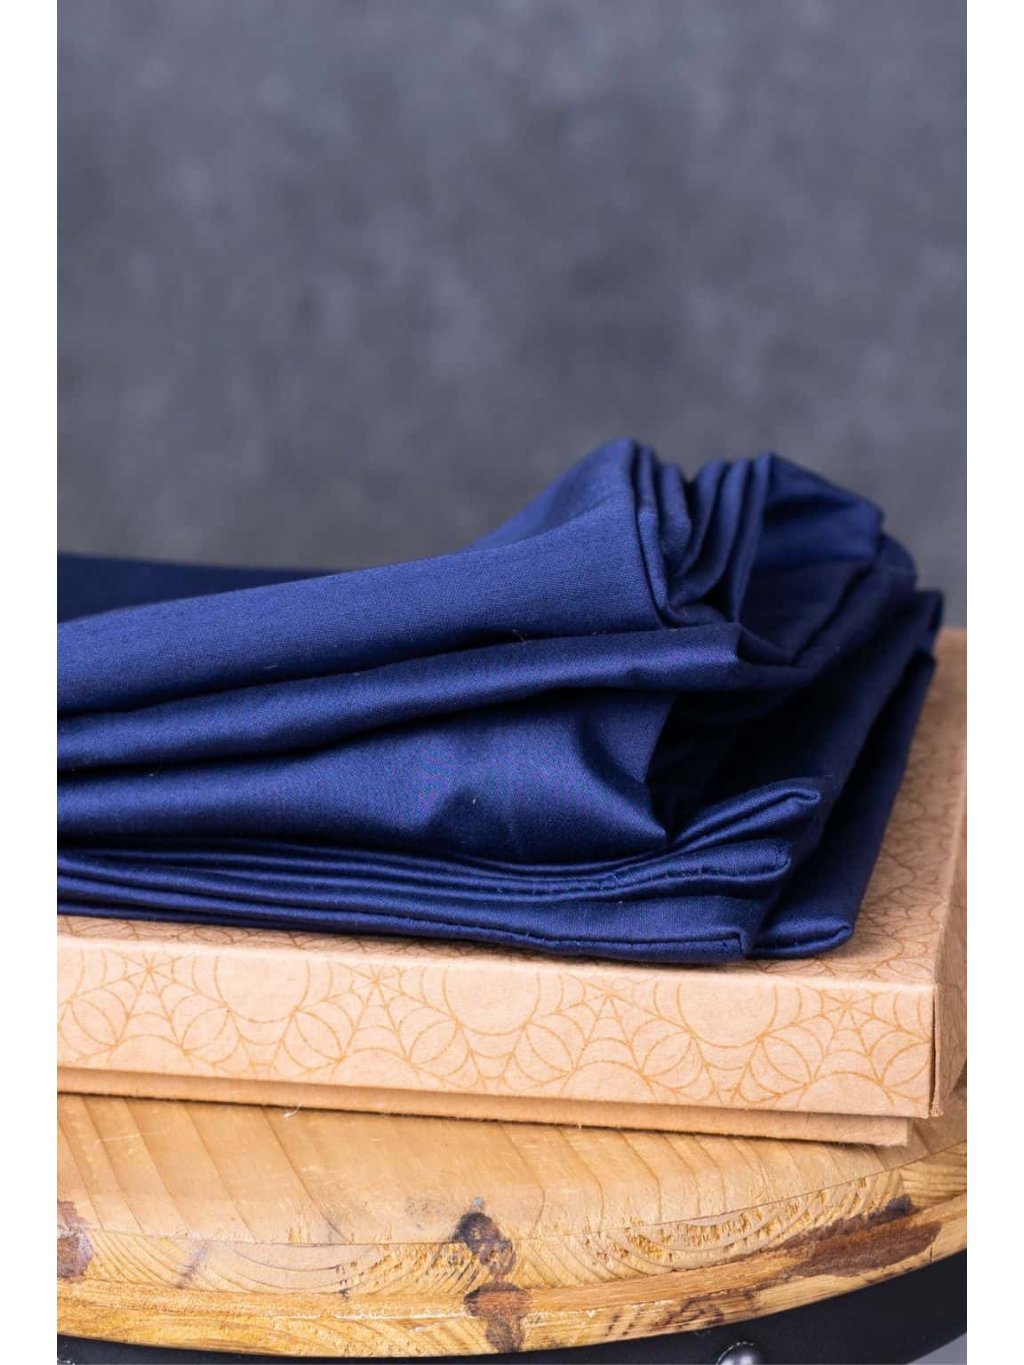 Anti-Dust Mite and Allergen Proof Pillowcase for Memory Foam Orthopedic Pillow | Nanocotton® - nanoSPACE Blue  Cotton satin nanoSPACE Blue